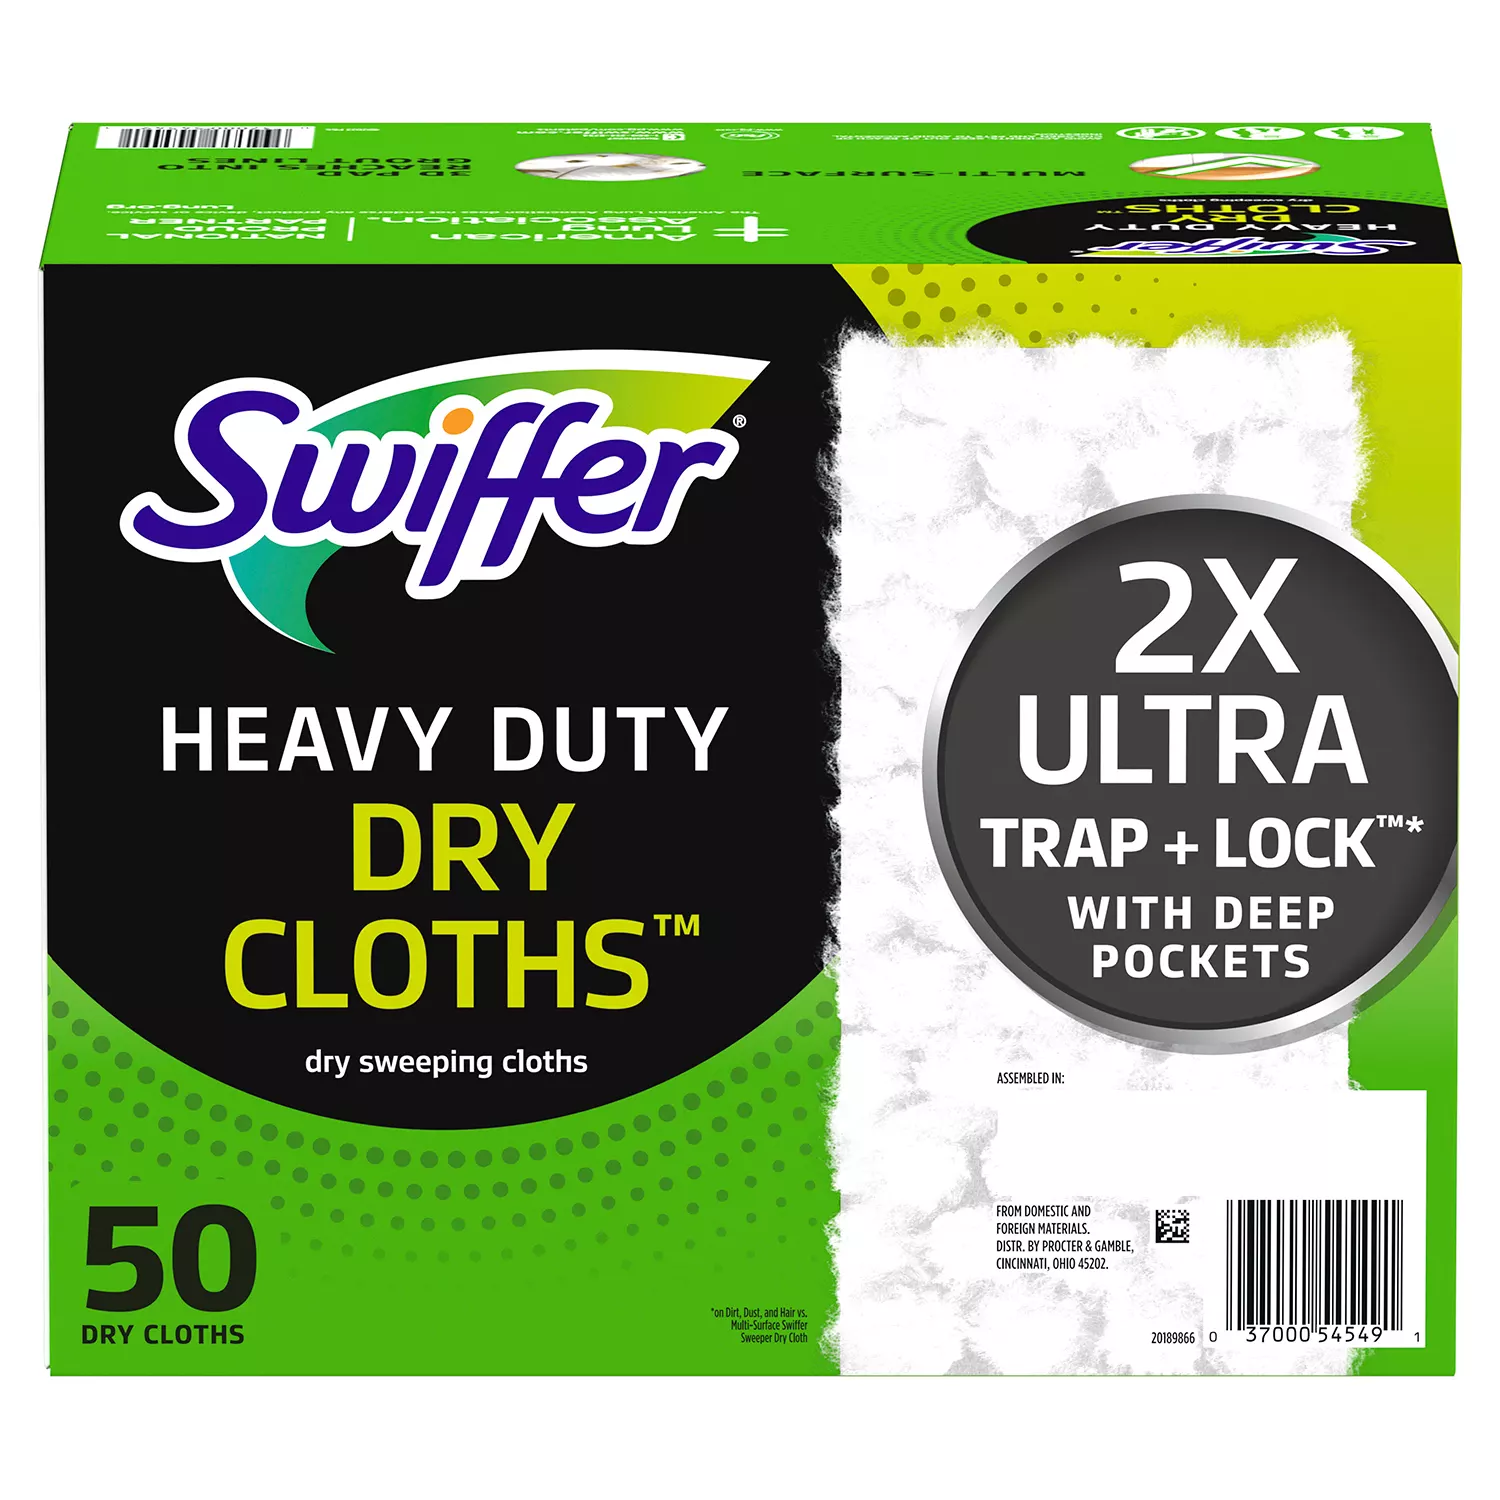 Swiffer Sweeper Heavy Duty Dry Sweeping Cloths (50 ct.)